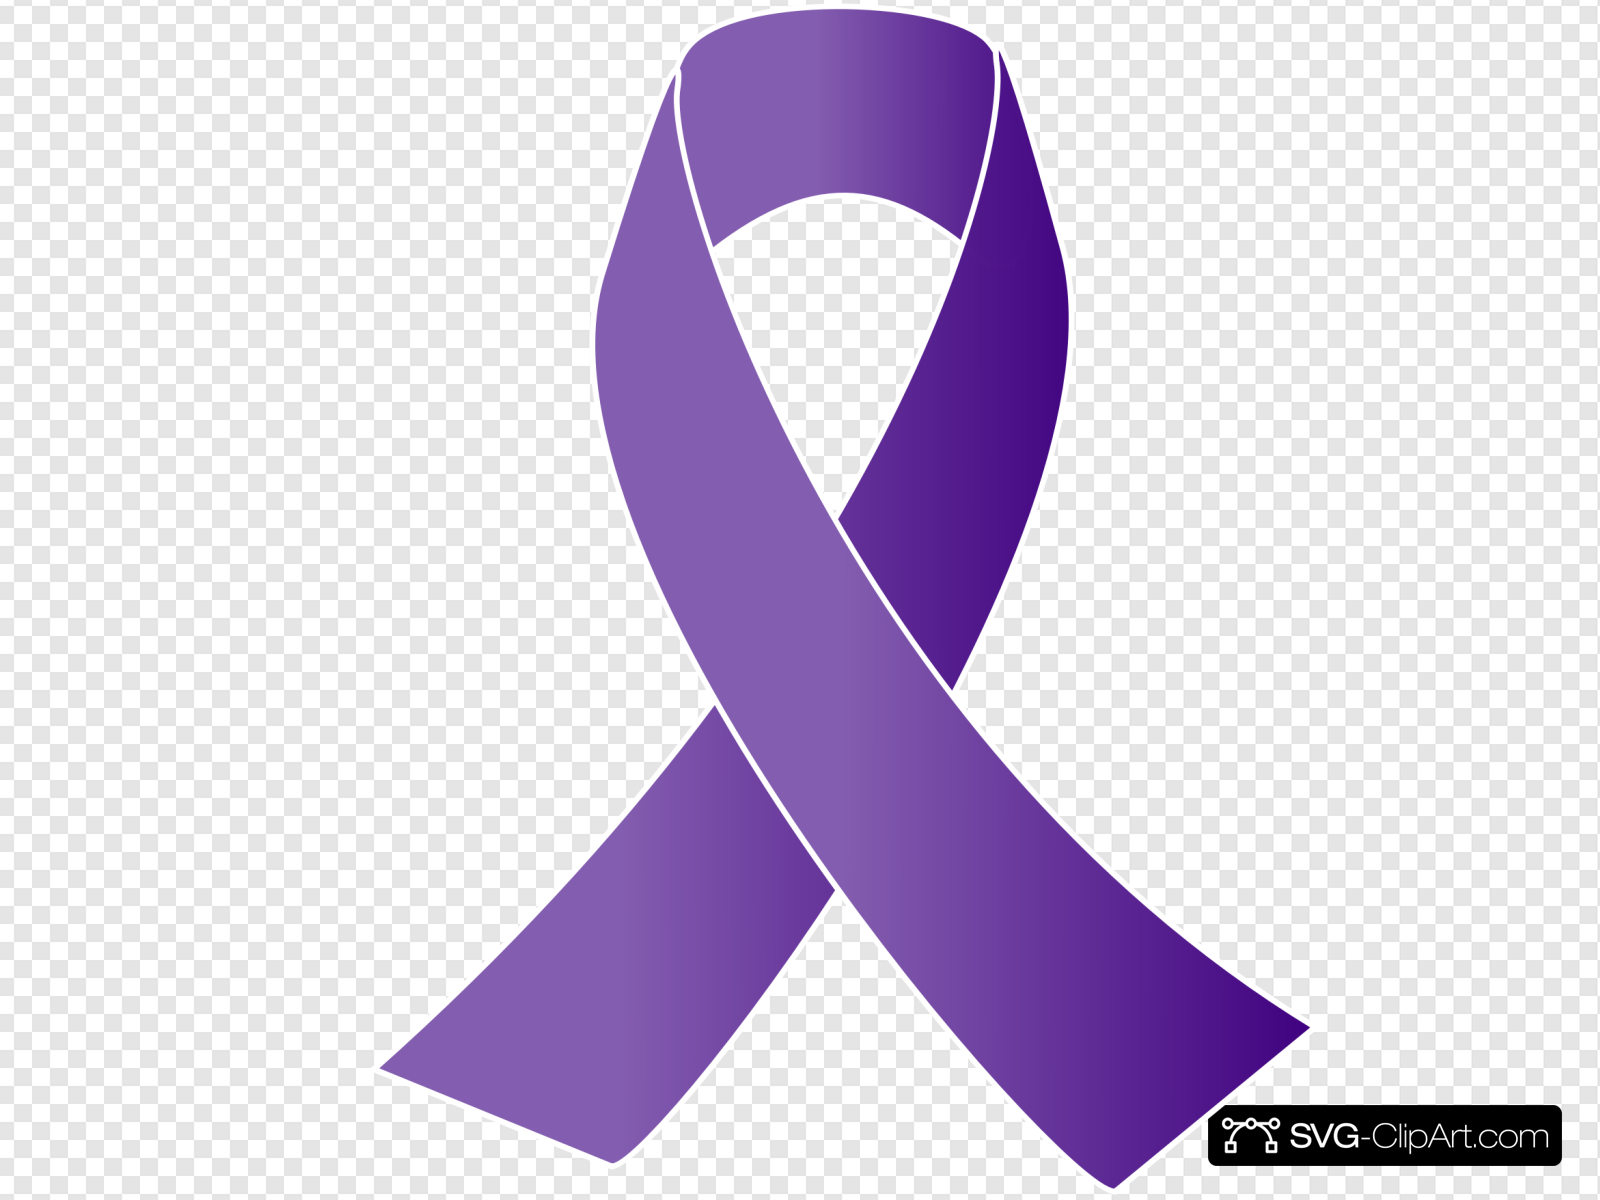 Purple Awareness Ribbon Clip art, Icon and SVG.